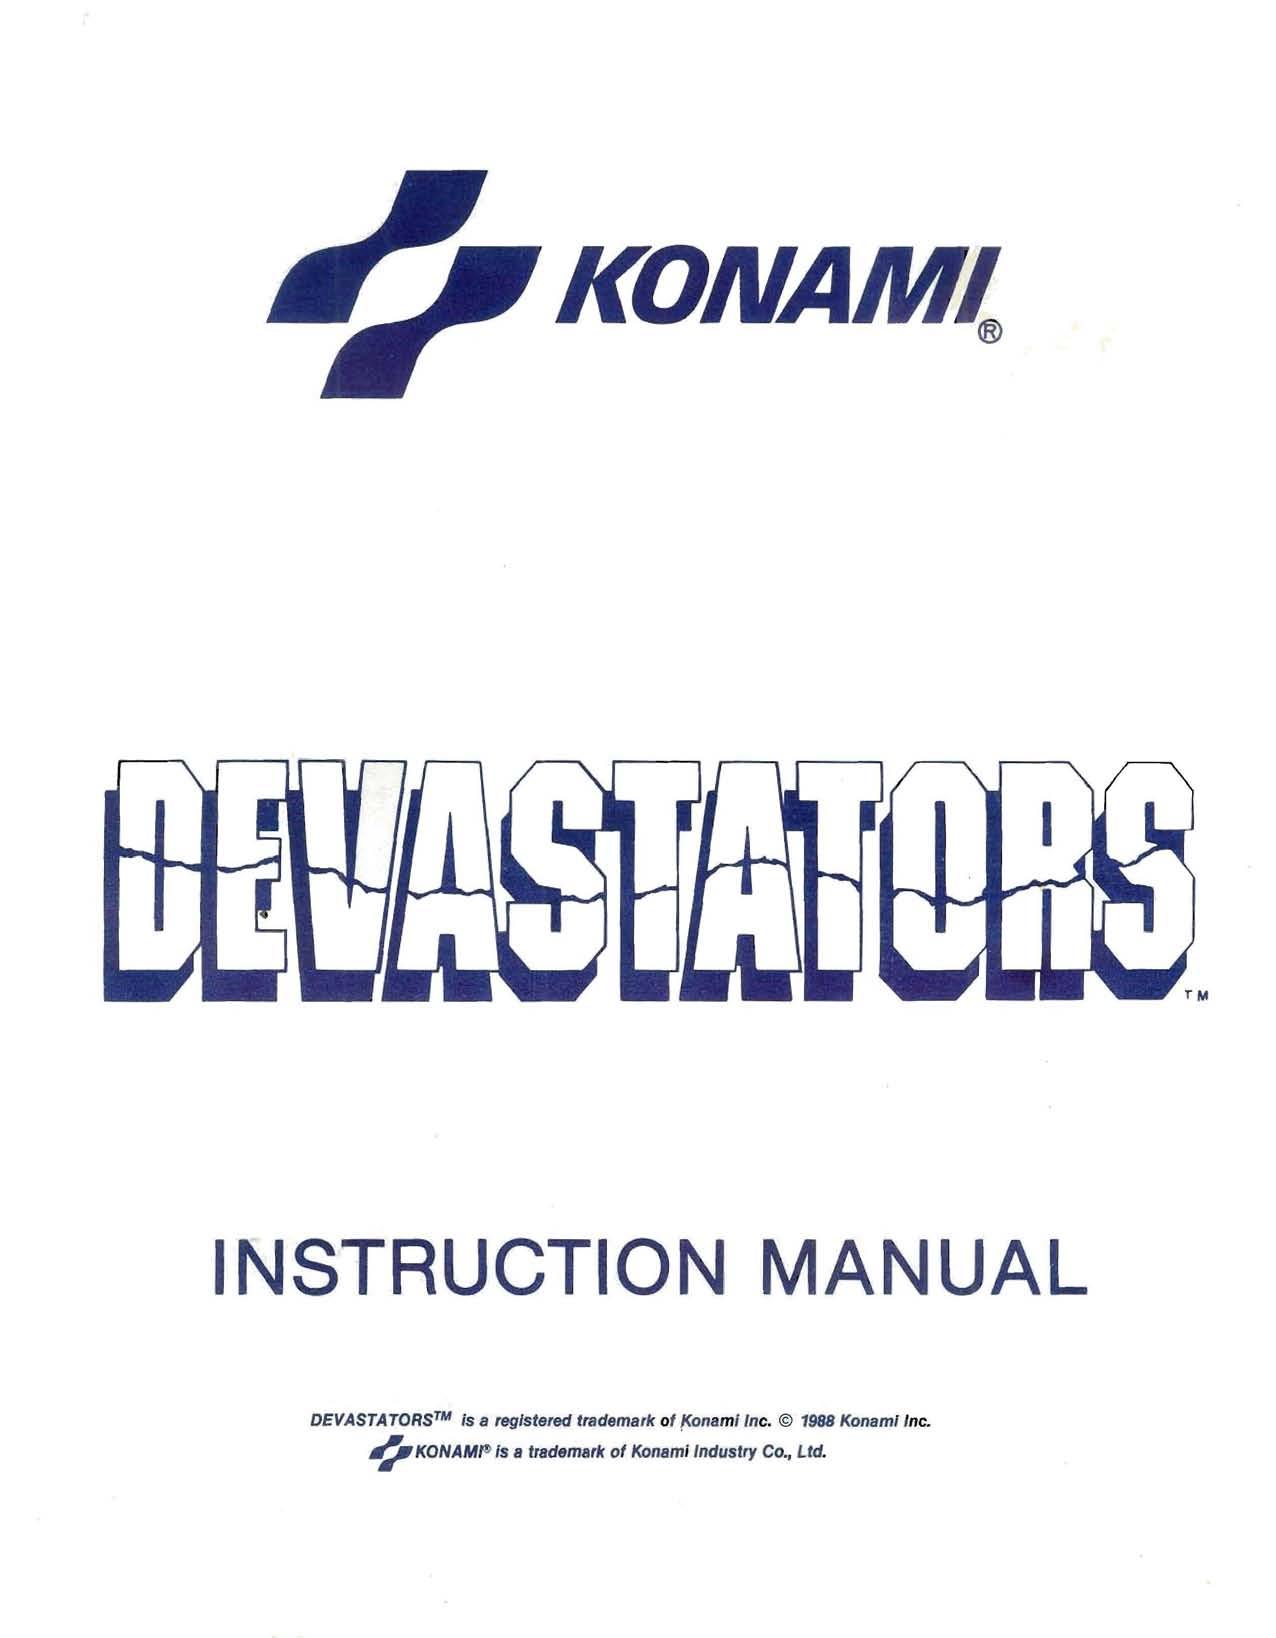 Devastators Instruction Manual